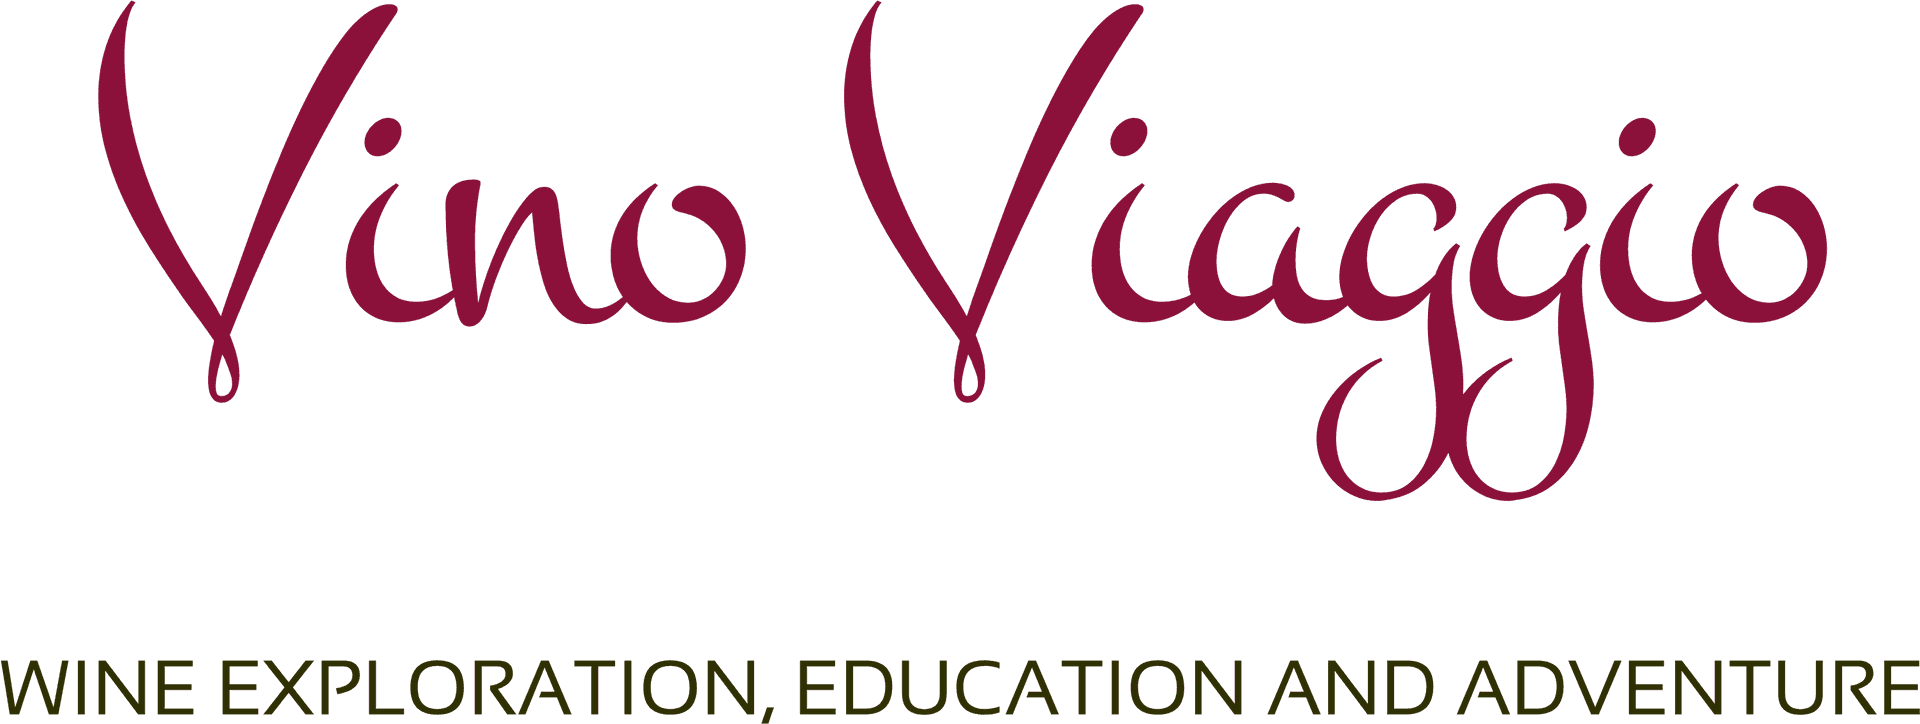 Vino Viaggio Wine Exploration Logo PNG